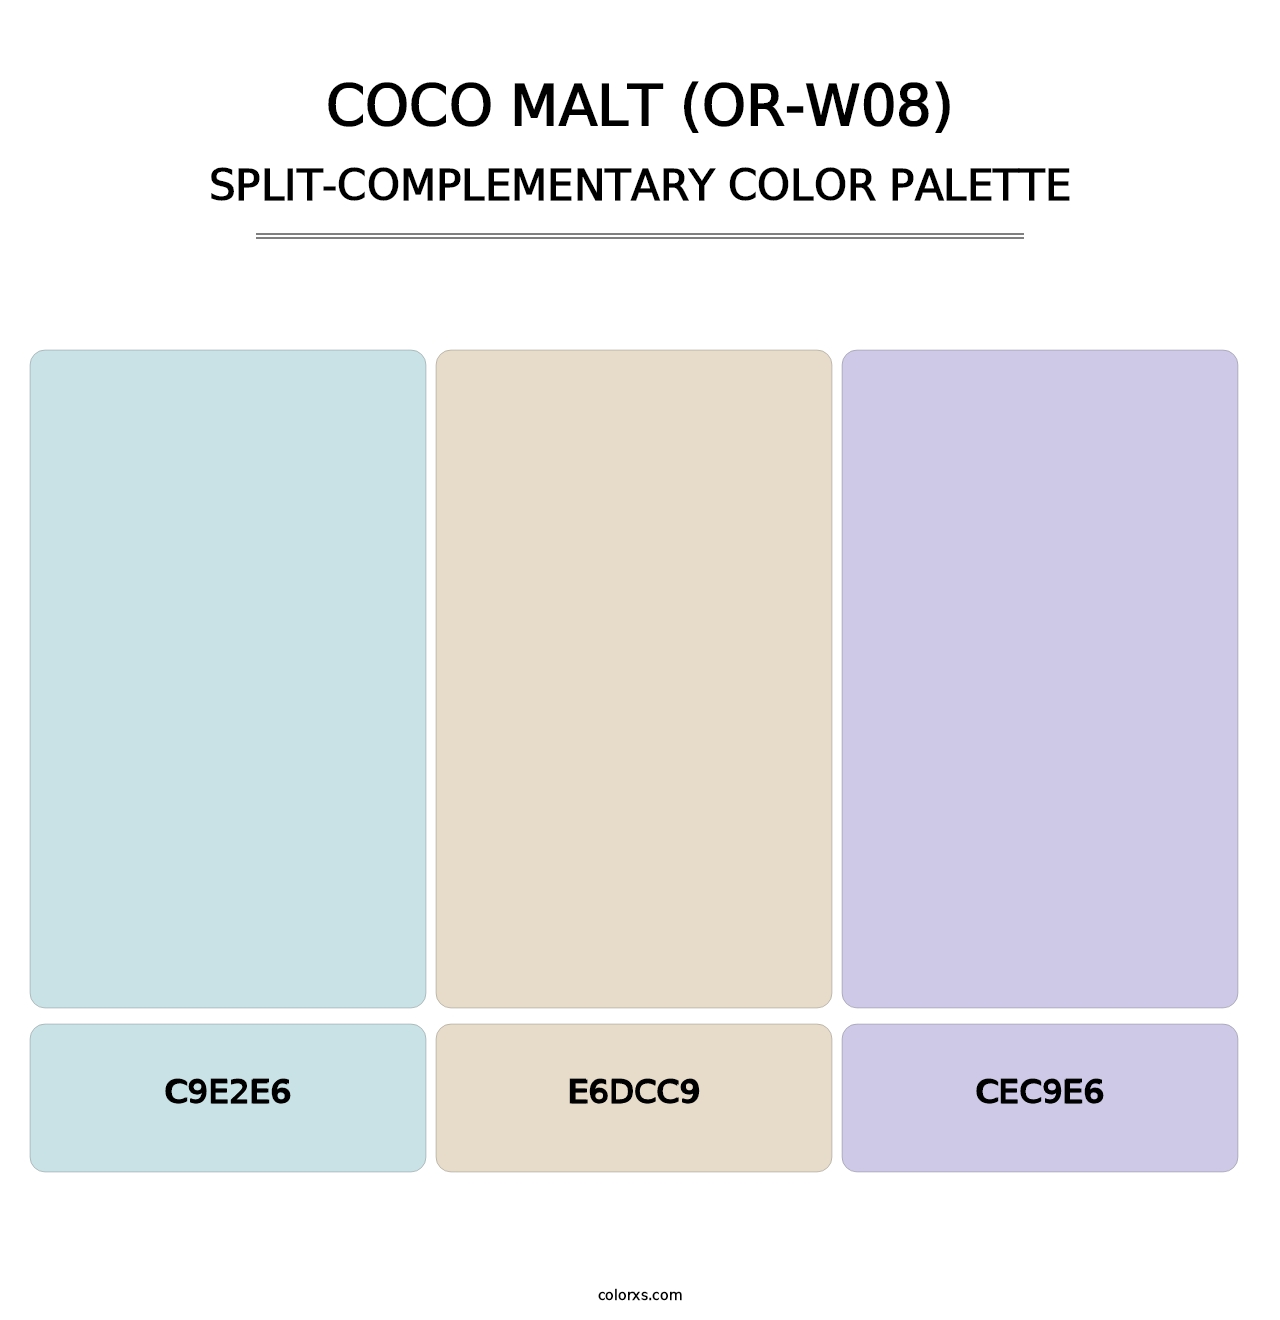 Coco Malt (OR-W08) - Split-Complementary Color Palette